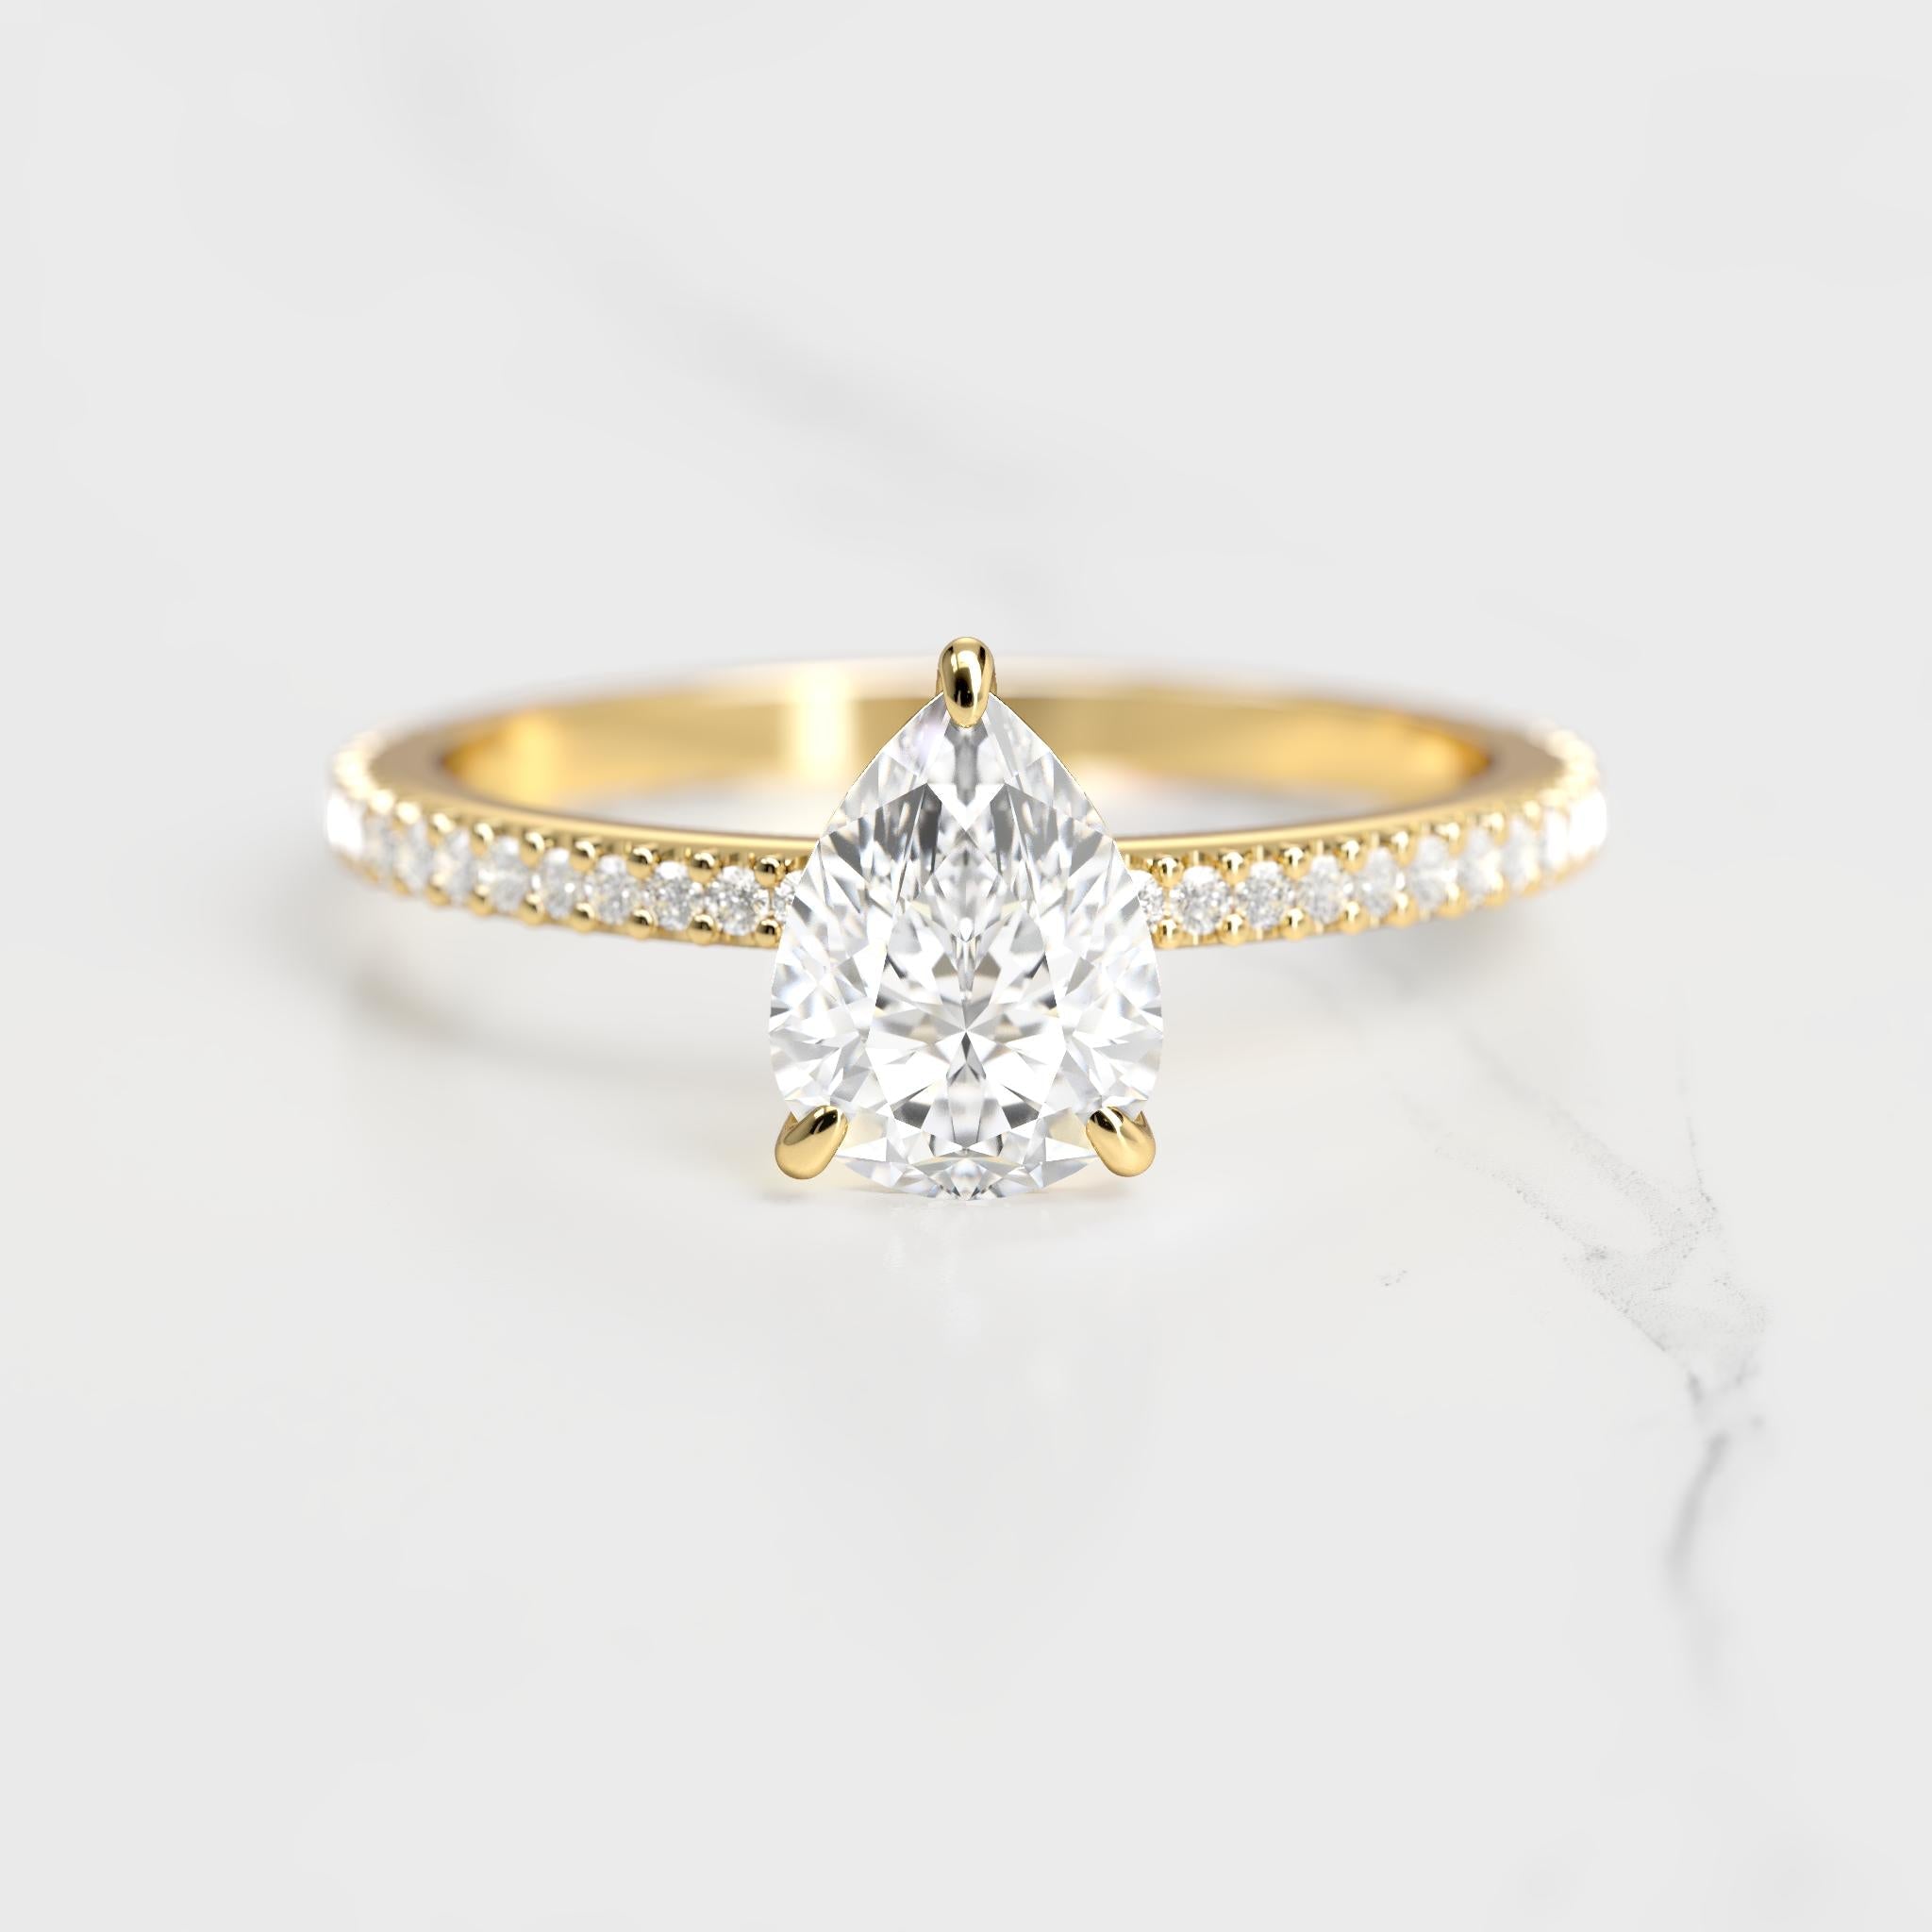 PEAR FULL PAVE DIAMOND RING - 14k rose gold / 1ct / lab diamond